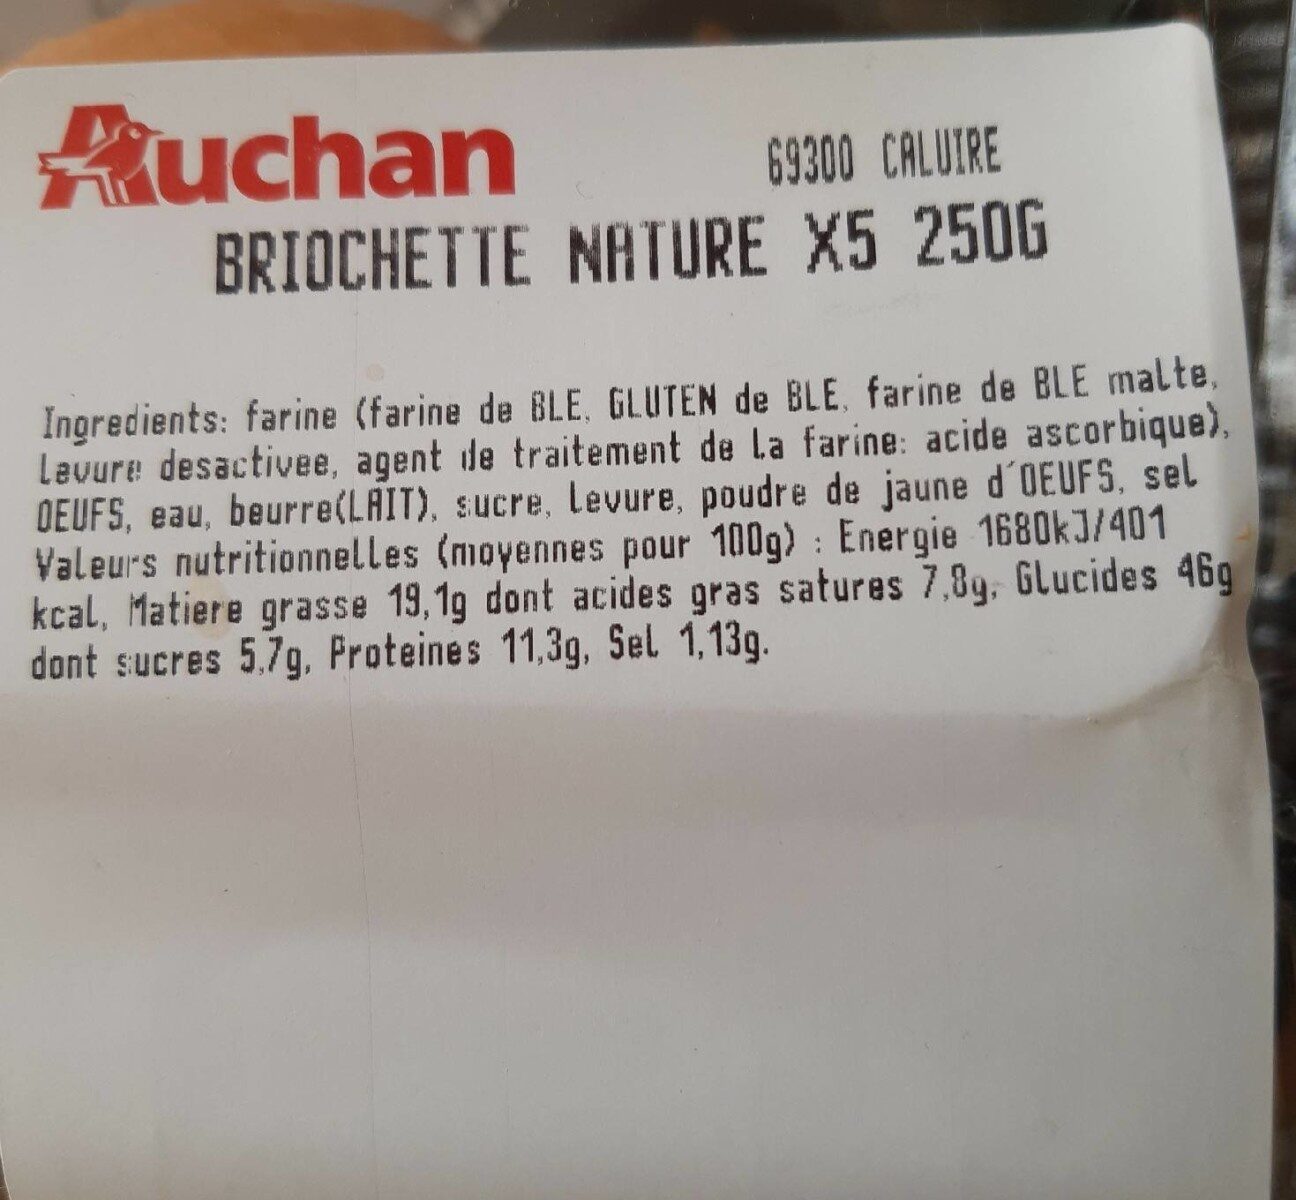 Briochette nature x5 250g - Tableau nutritionnel